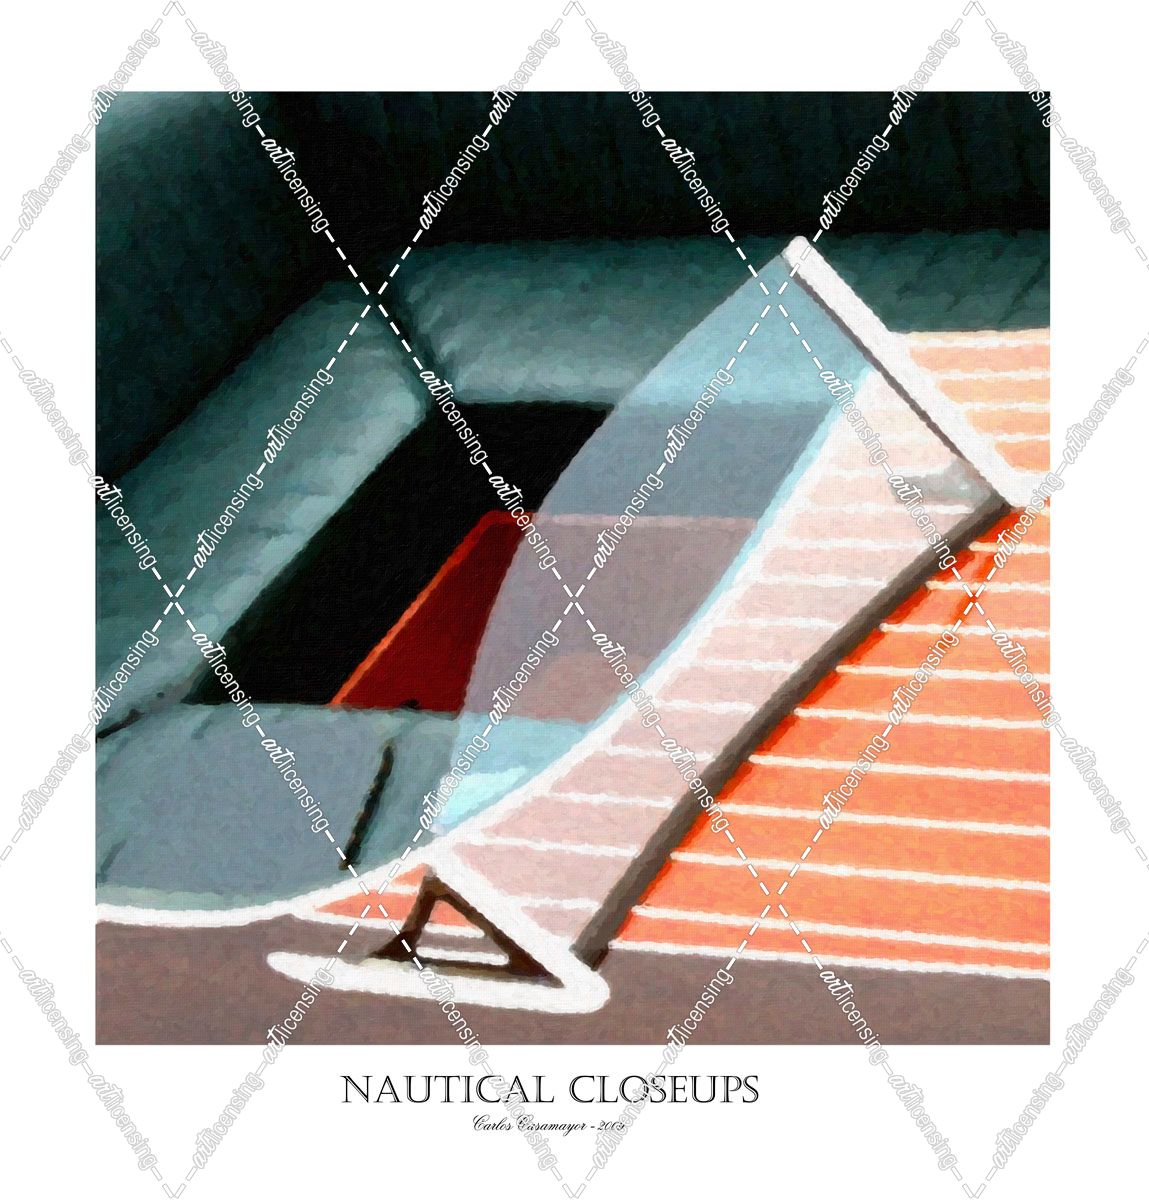 Nautical Closeups 2